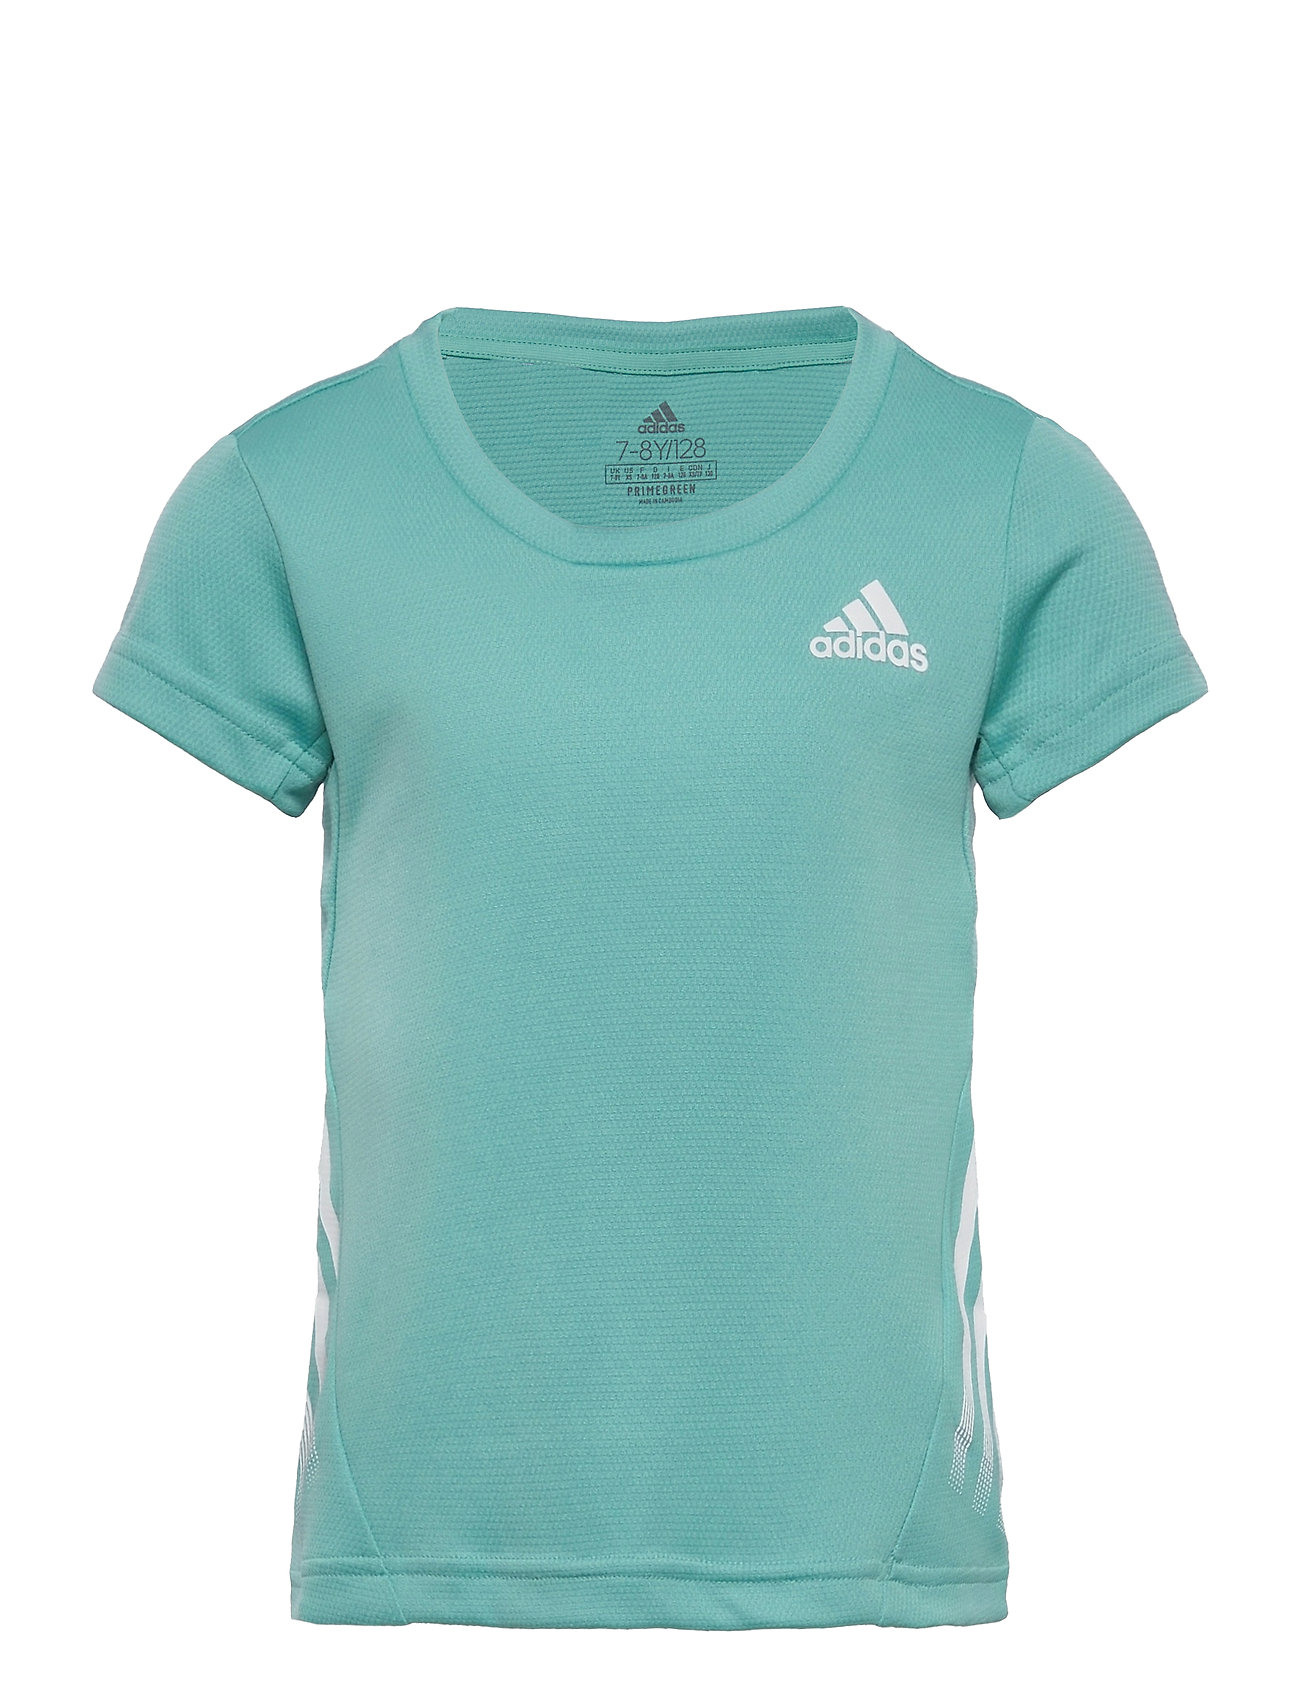 Aeroready 3-Stripes Tee W T-shirts Short-sleeved Sininen Adidas Performance, adidas Performance